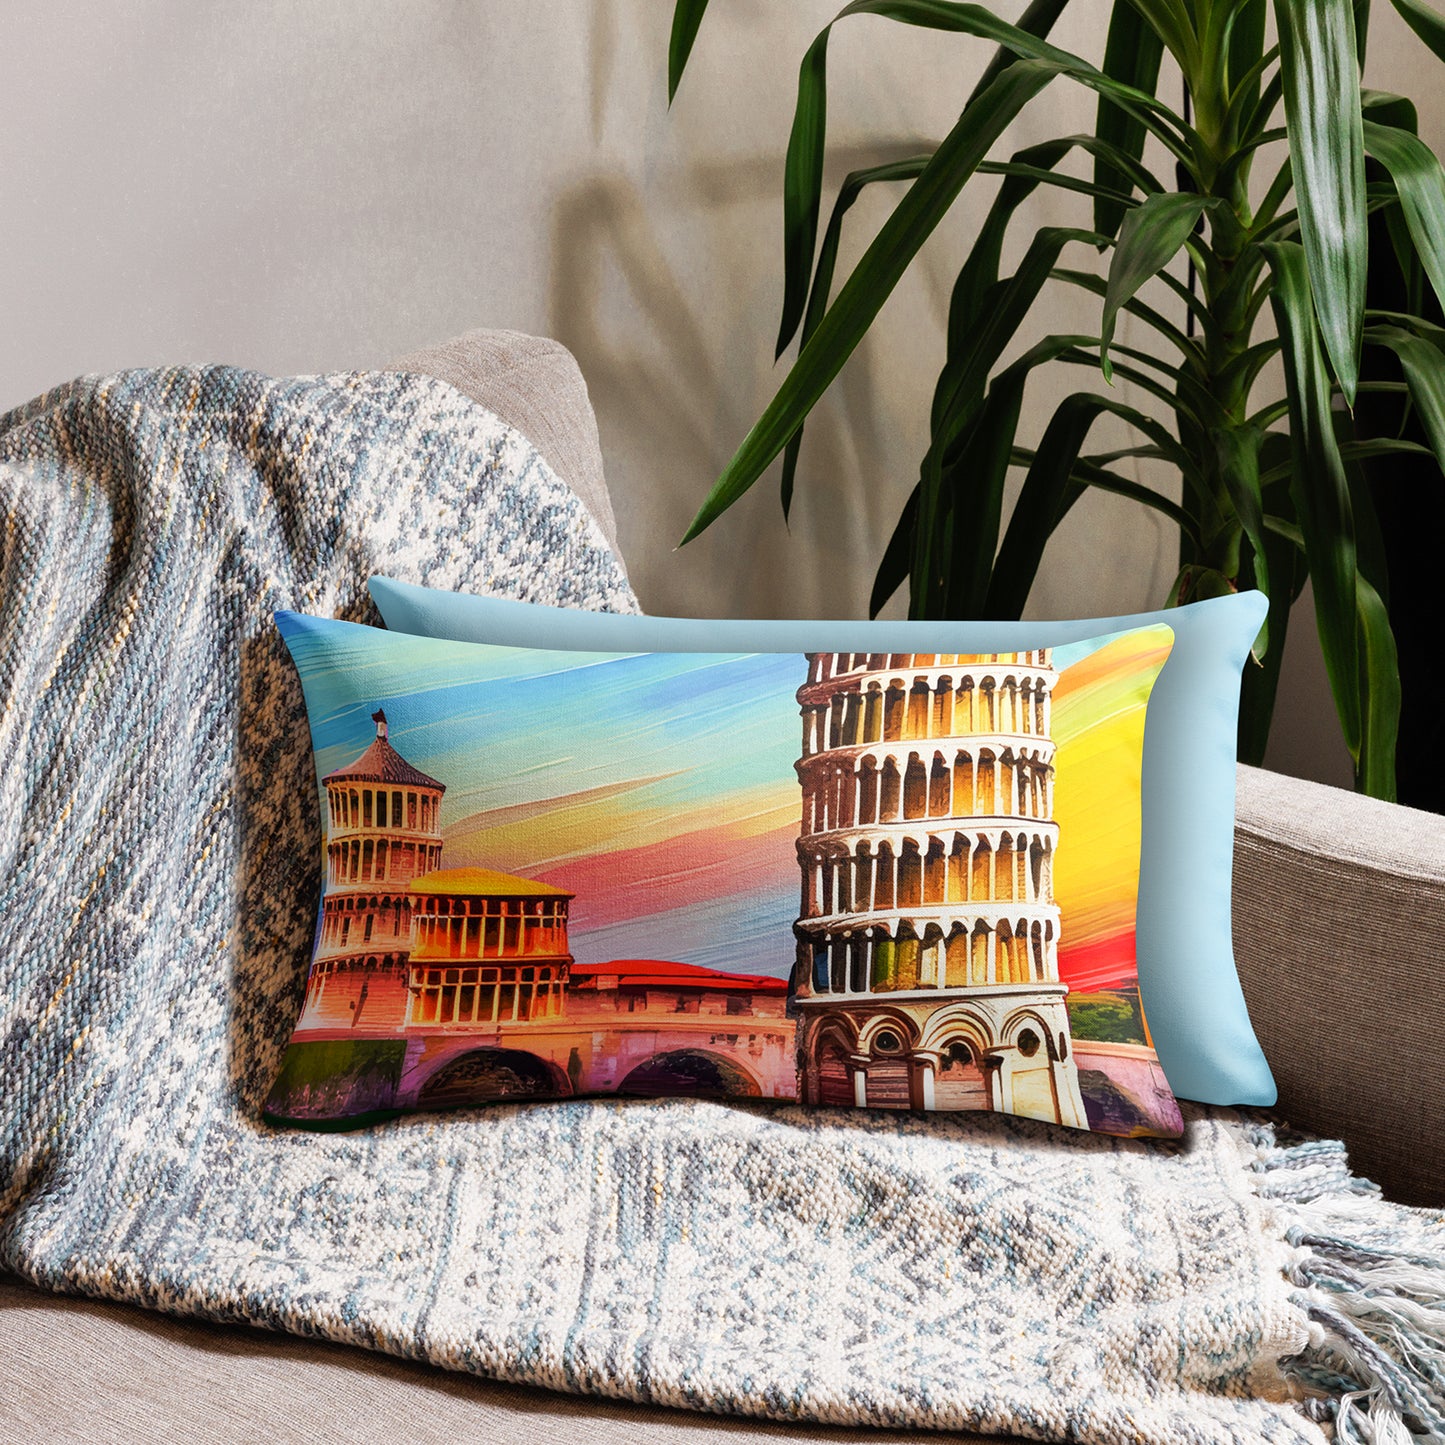 Stylish Pisa Premium Pillow | Shape-retaining insert for lasting support and comfort | Seepu